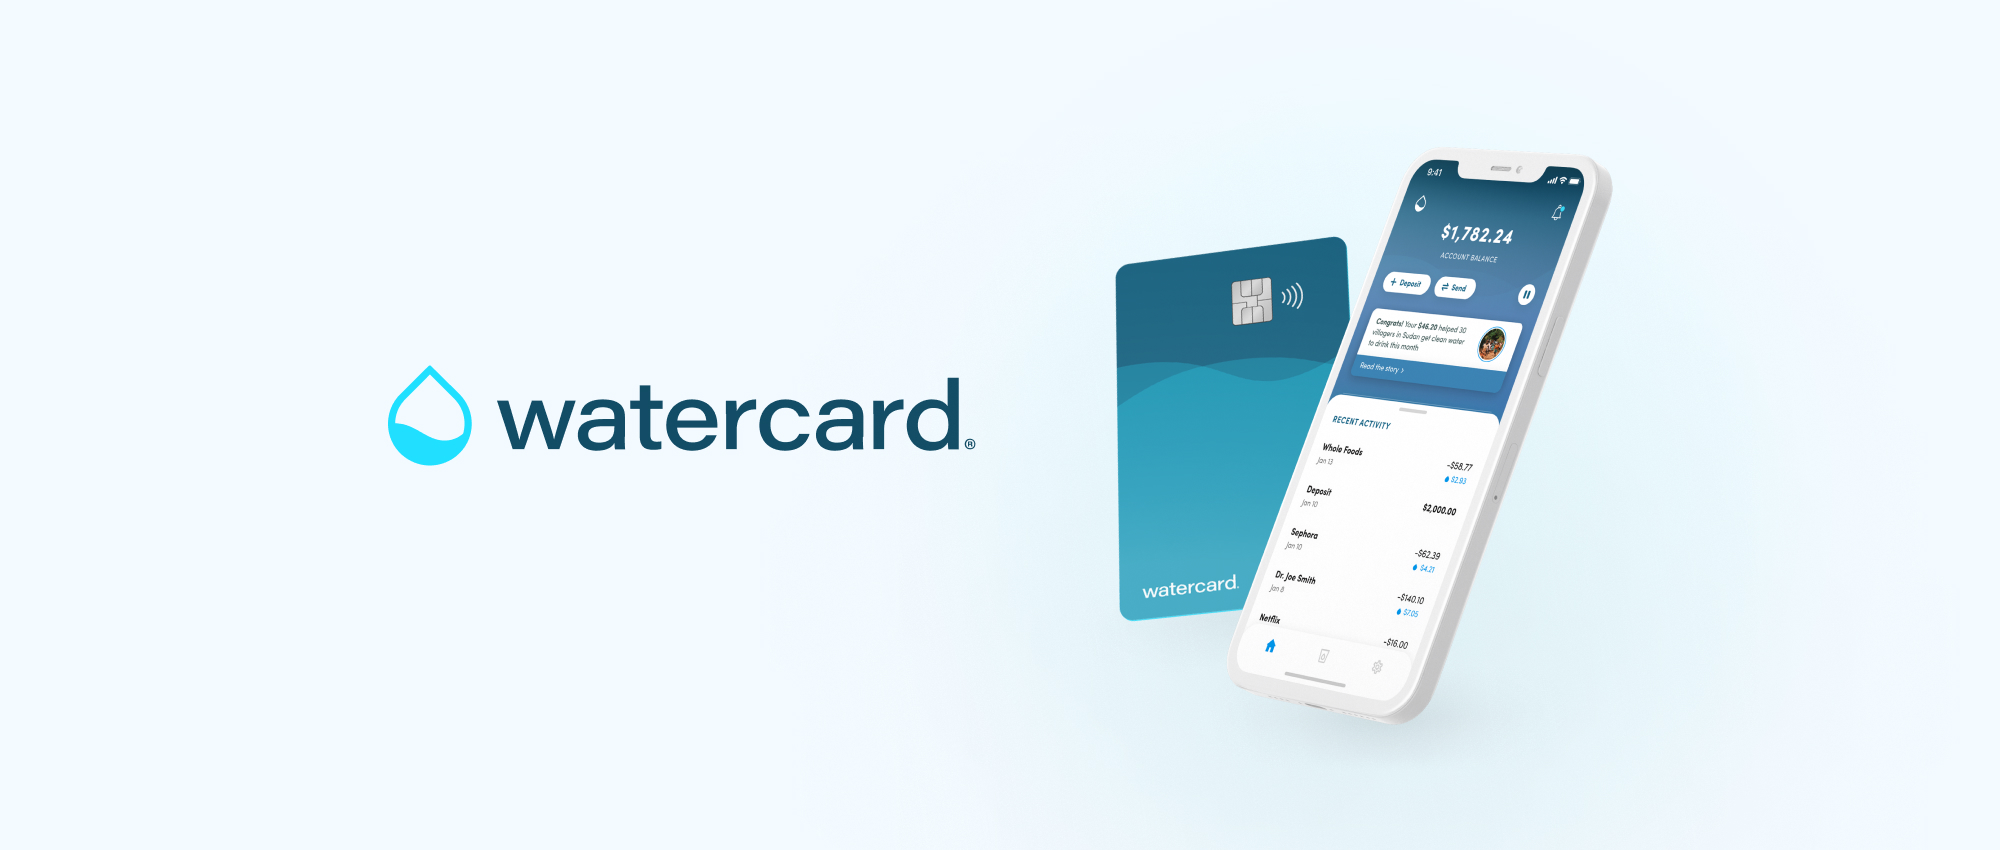 Watercard Challenge - Logo, Debit Card, and App Mockup